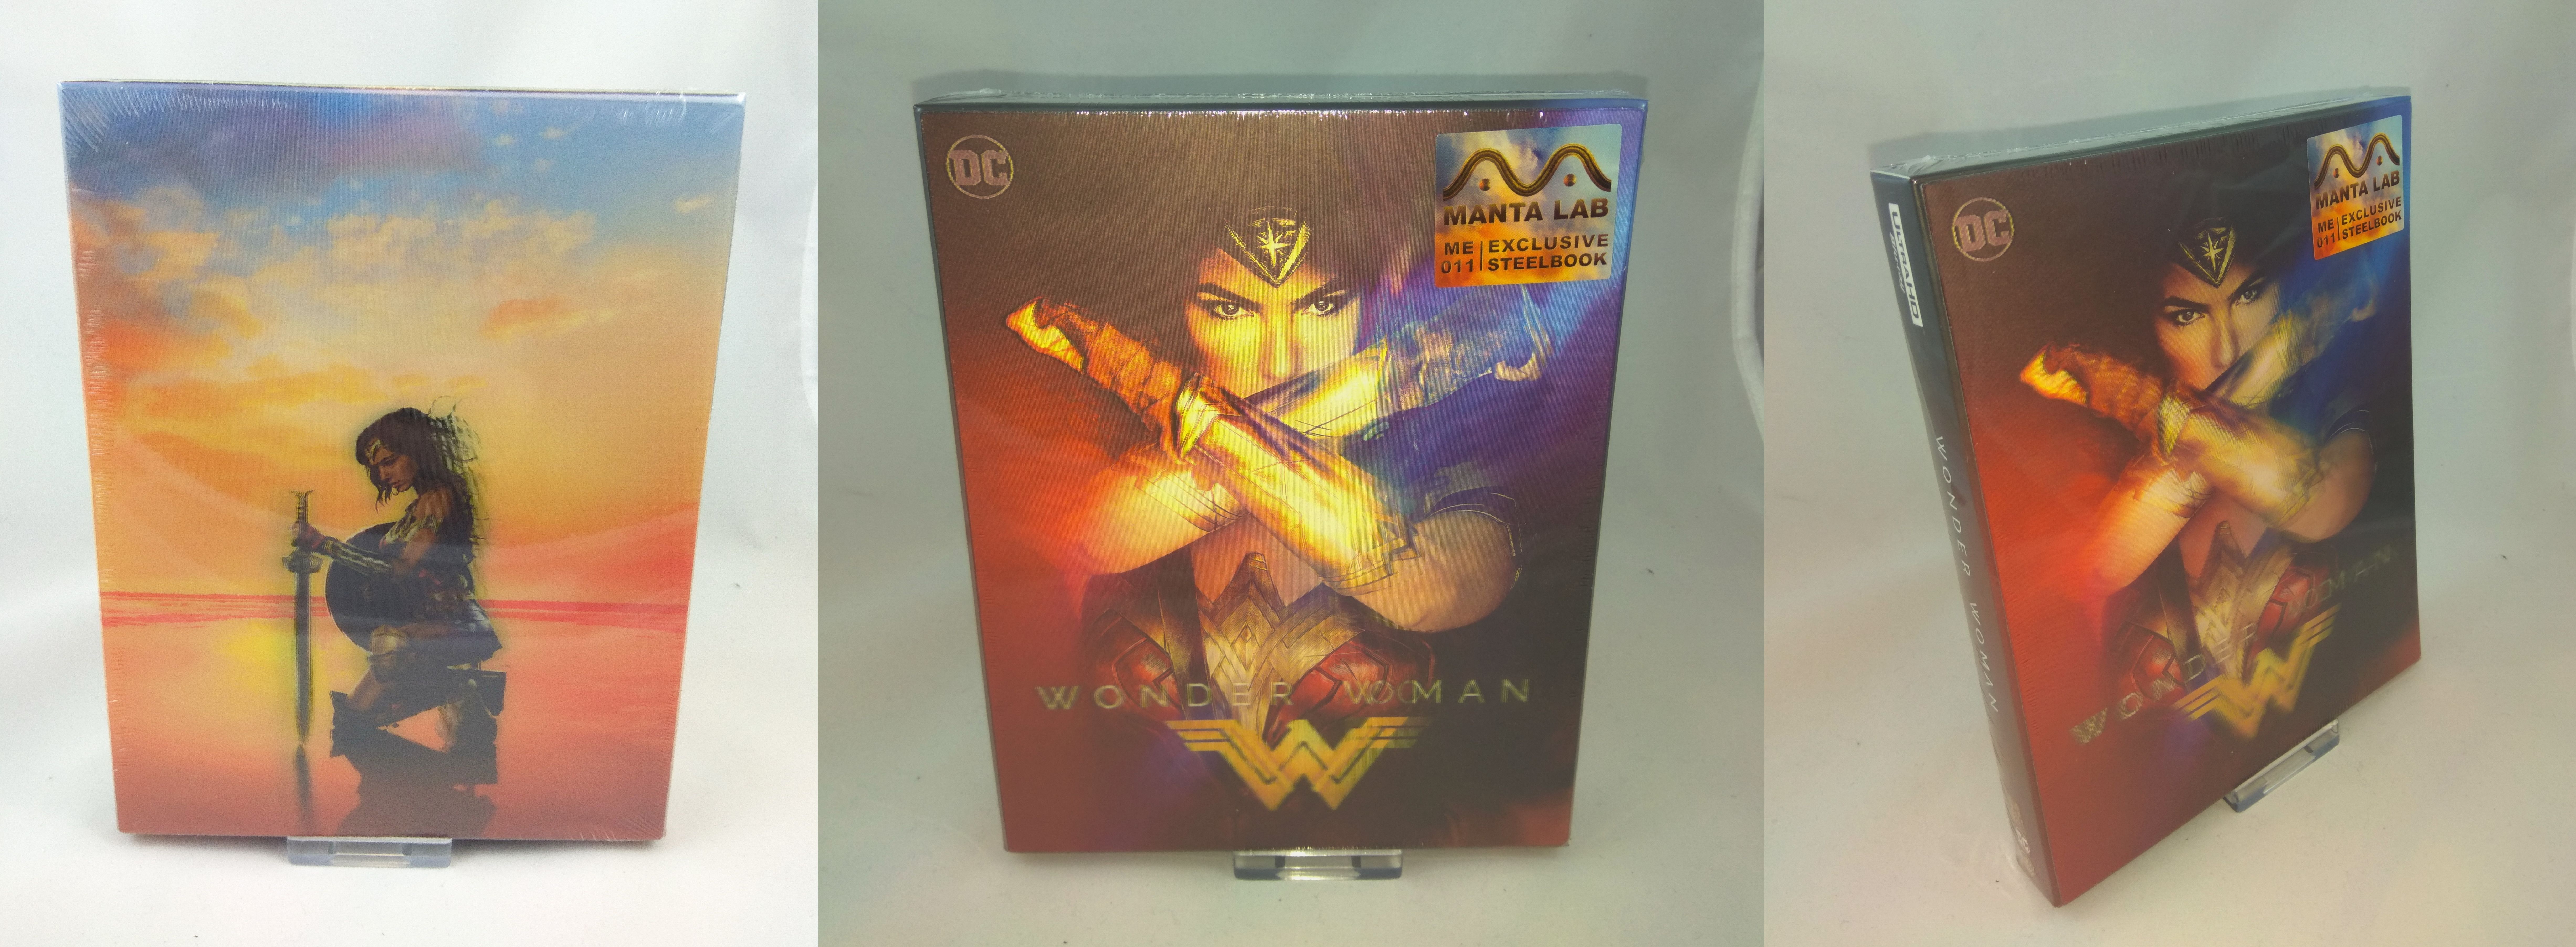 Wonder Woman Bluray Steelbook Mantalab 4K Double Lenticular